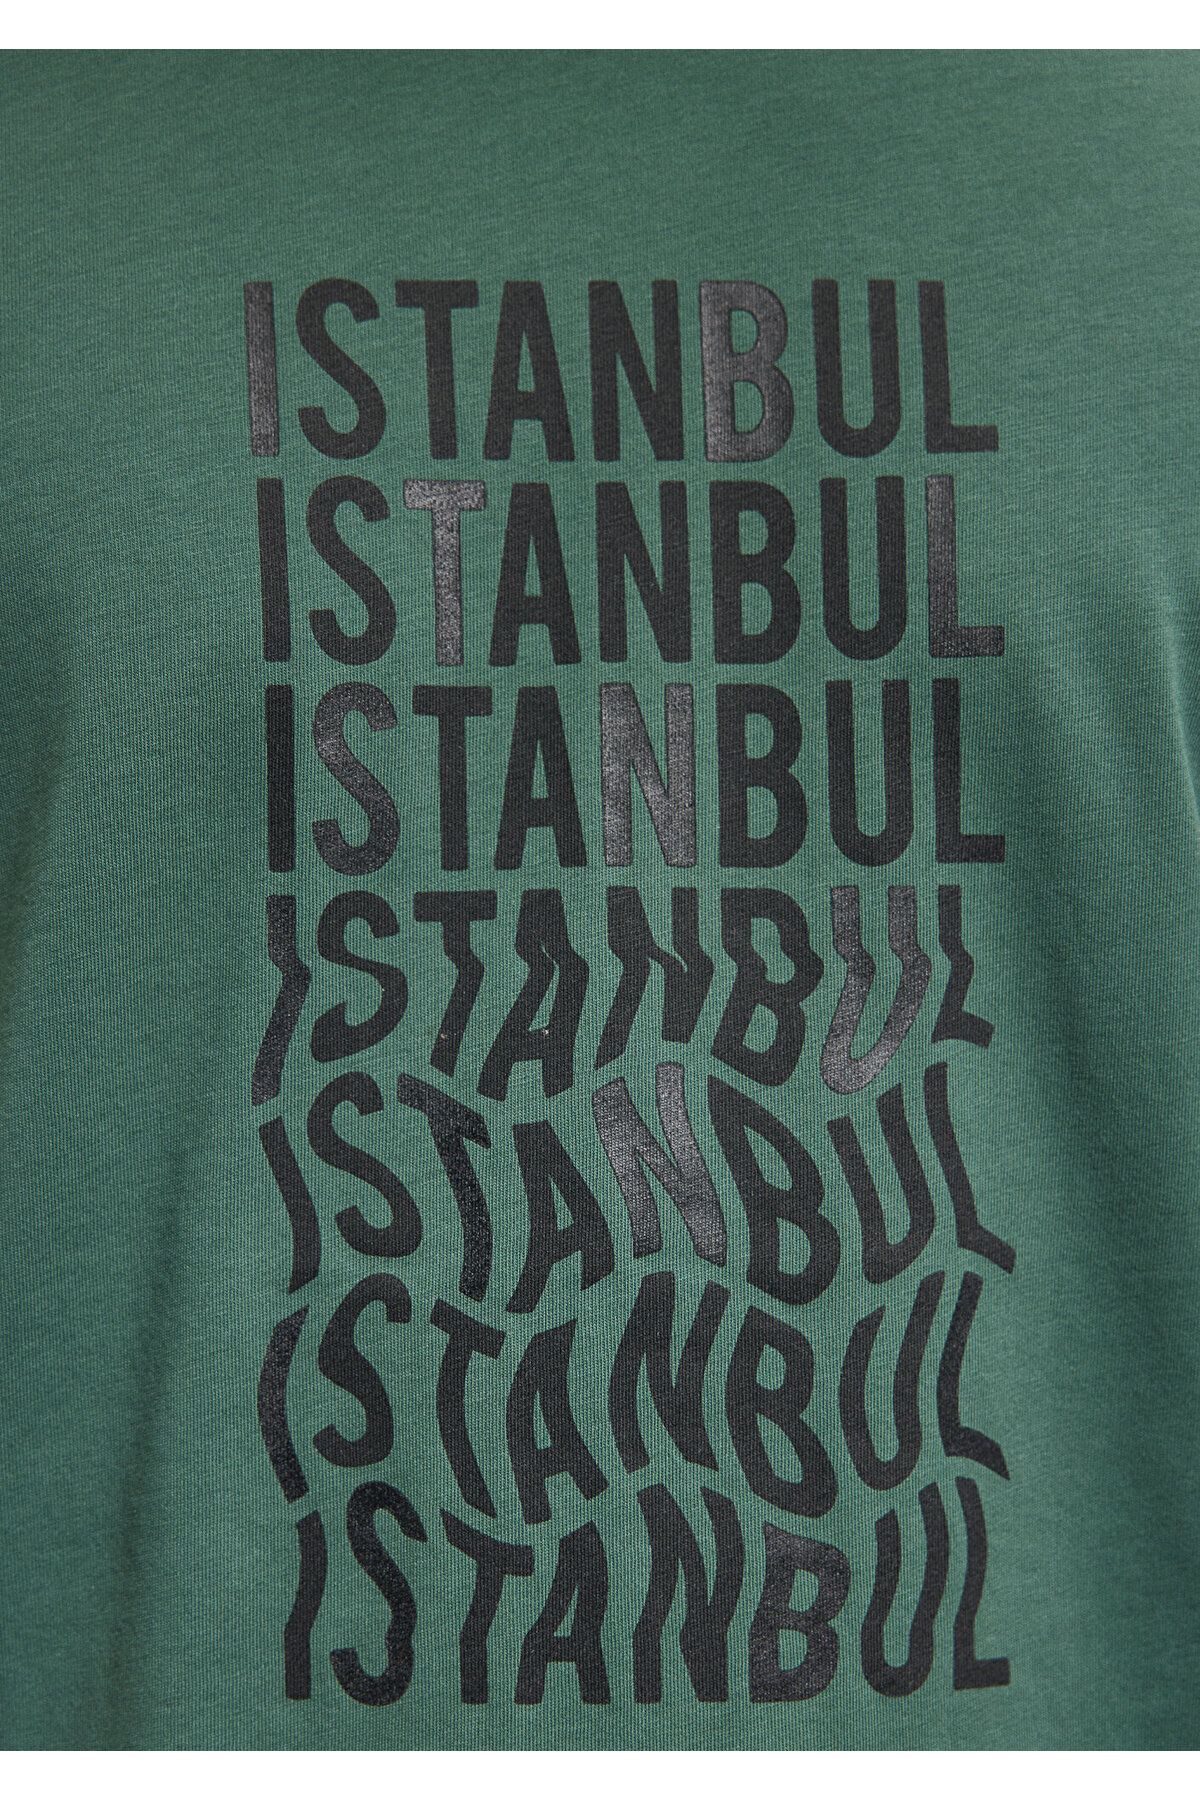 Mavi تی شرت سبز چاپ شده استانبول 0612275-71580